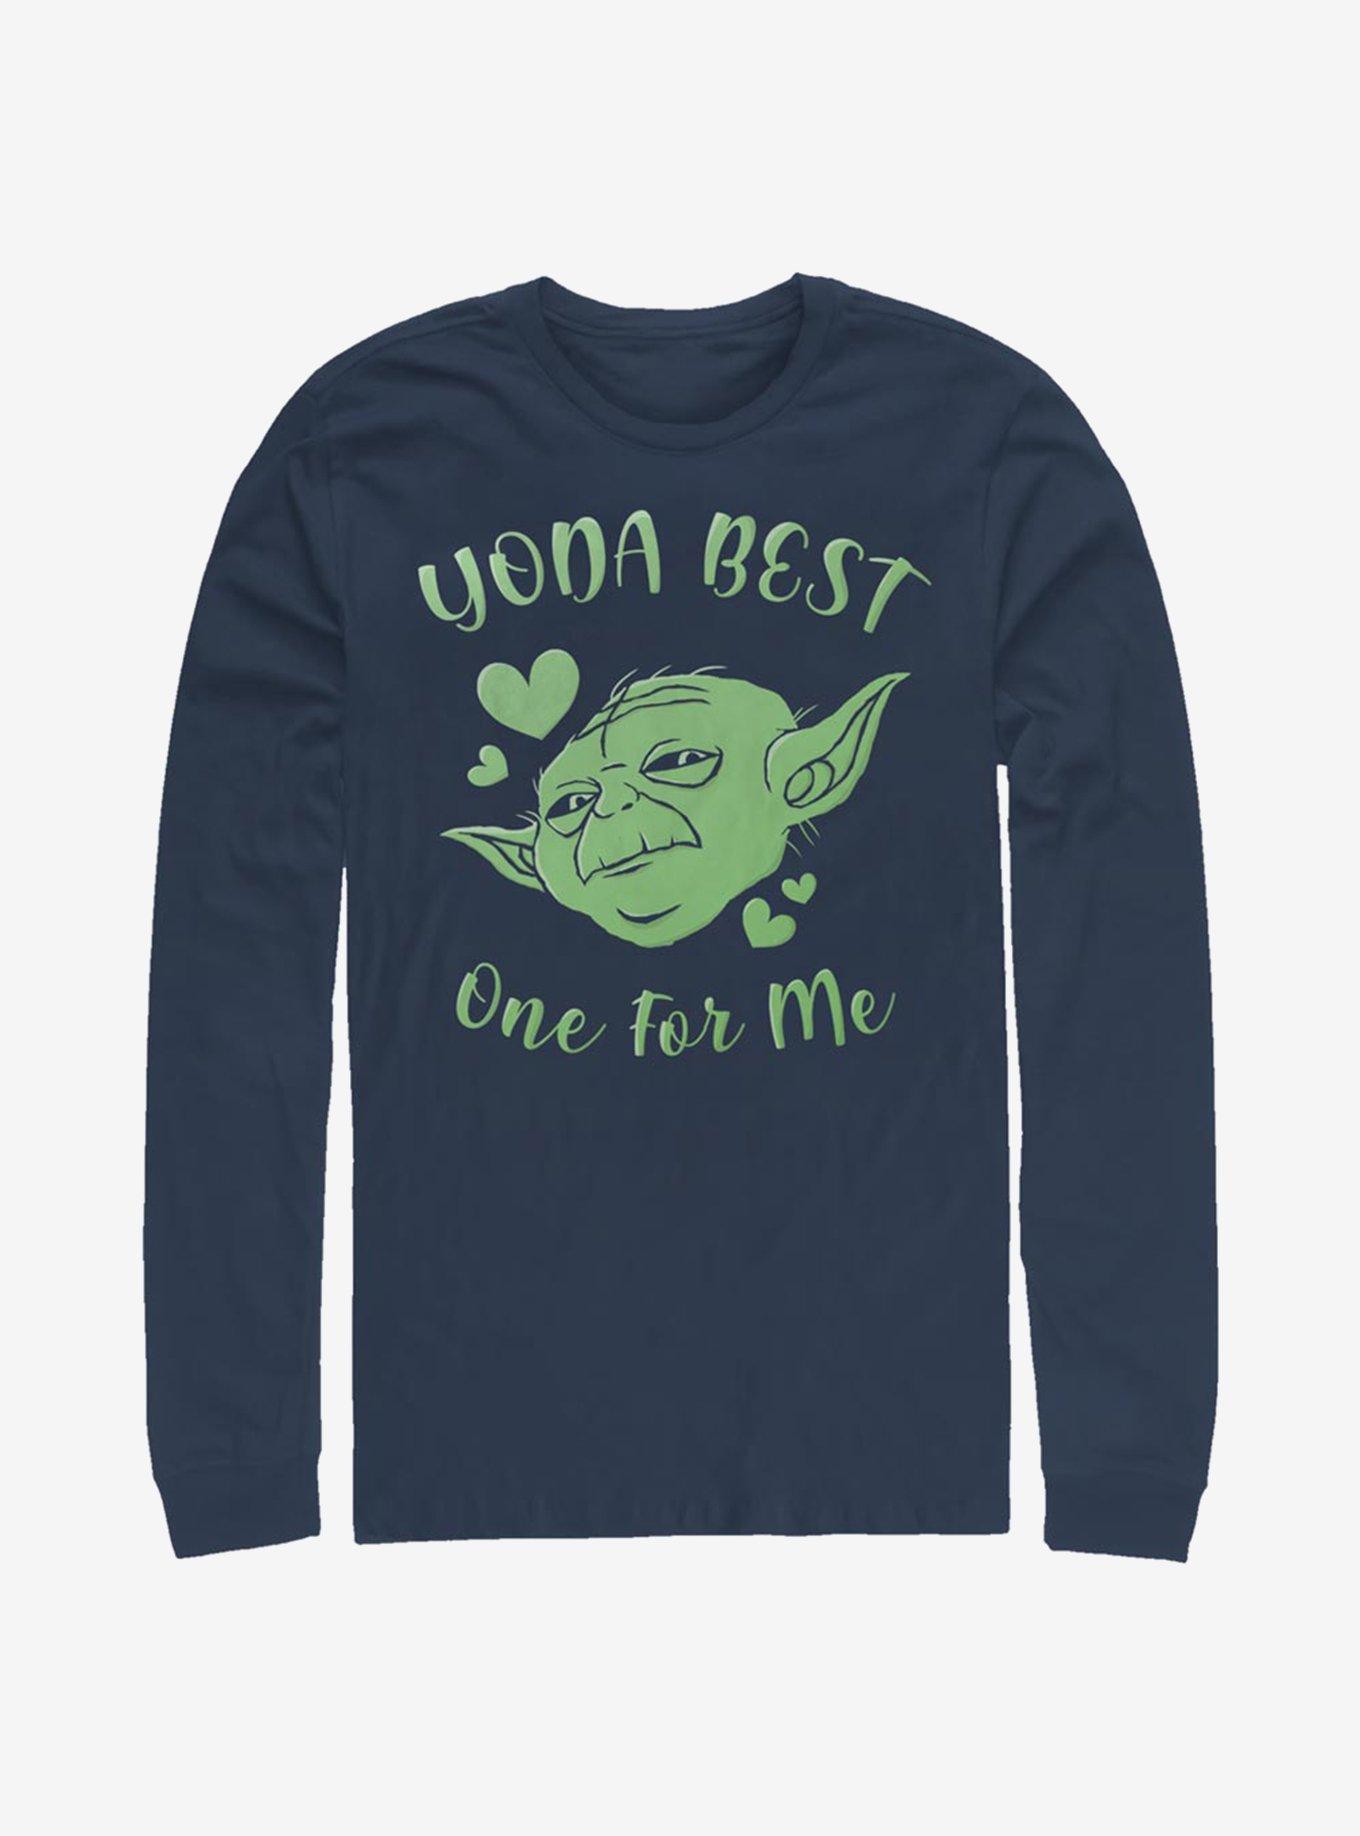 Star Wars Yoda Best Hearts Long-Sleeve T-Shirt